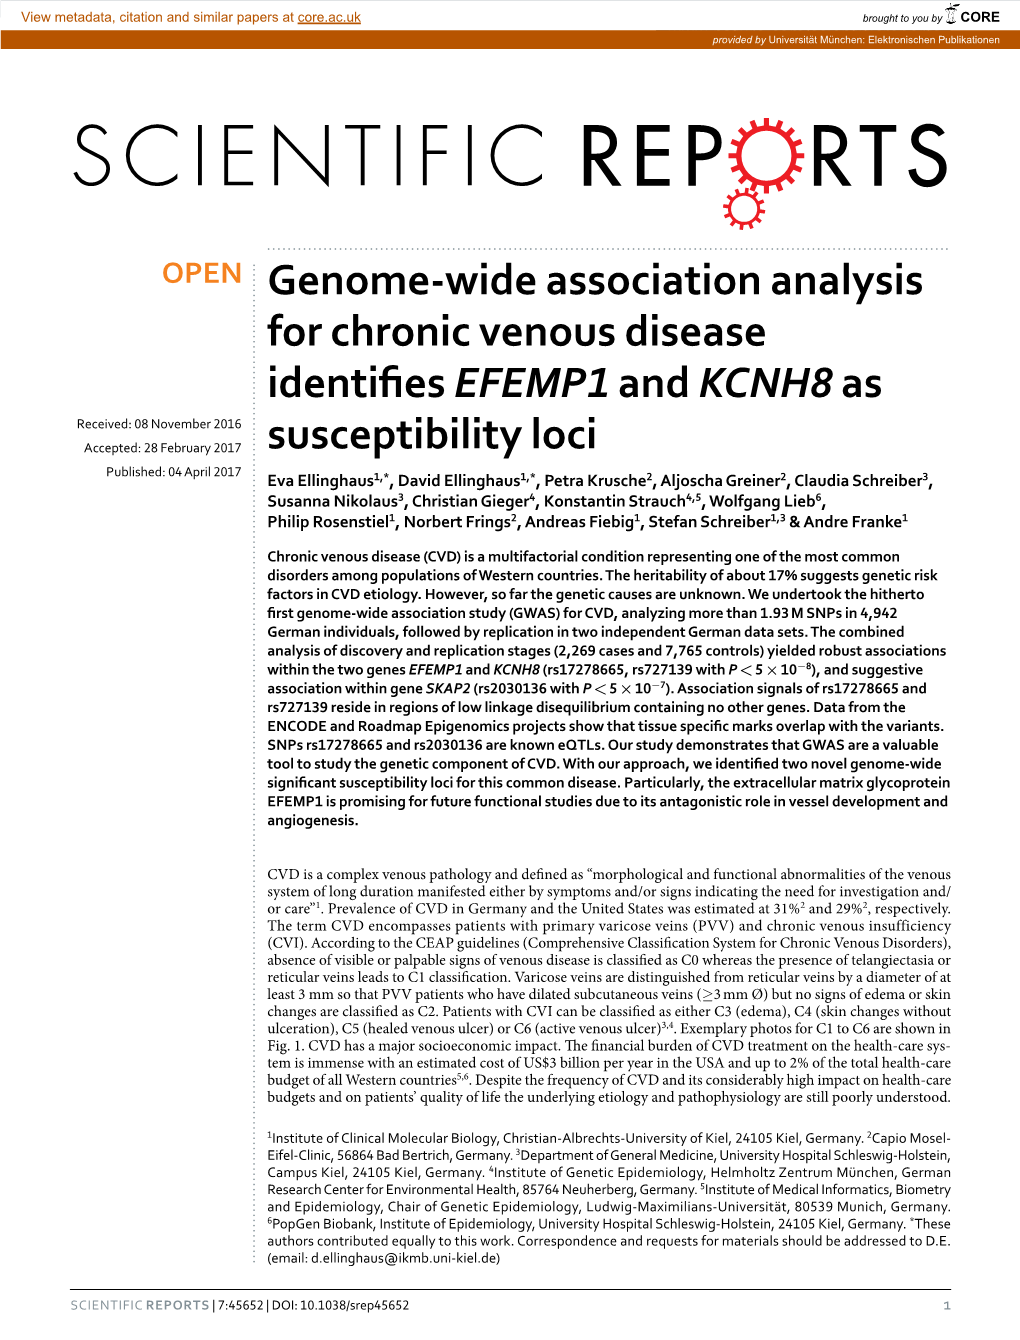 Genome-Wide Association Analysis for Chronic Venous Disease Identifies